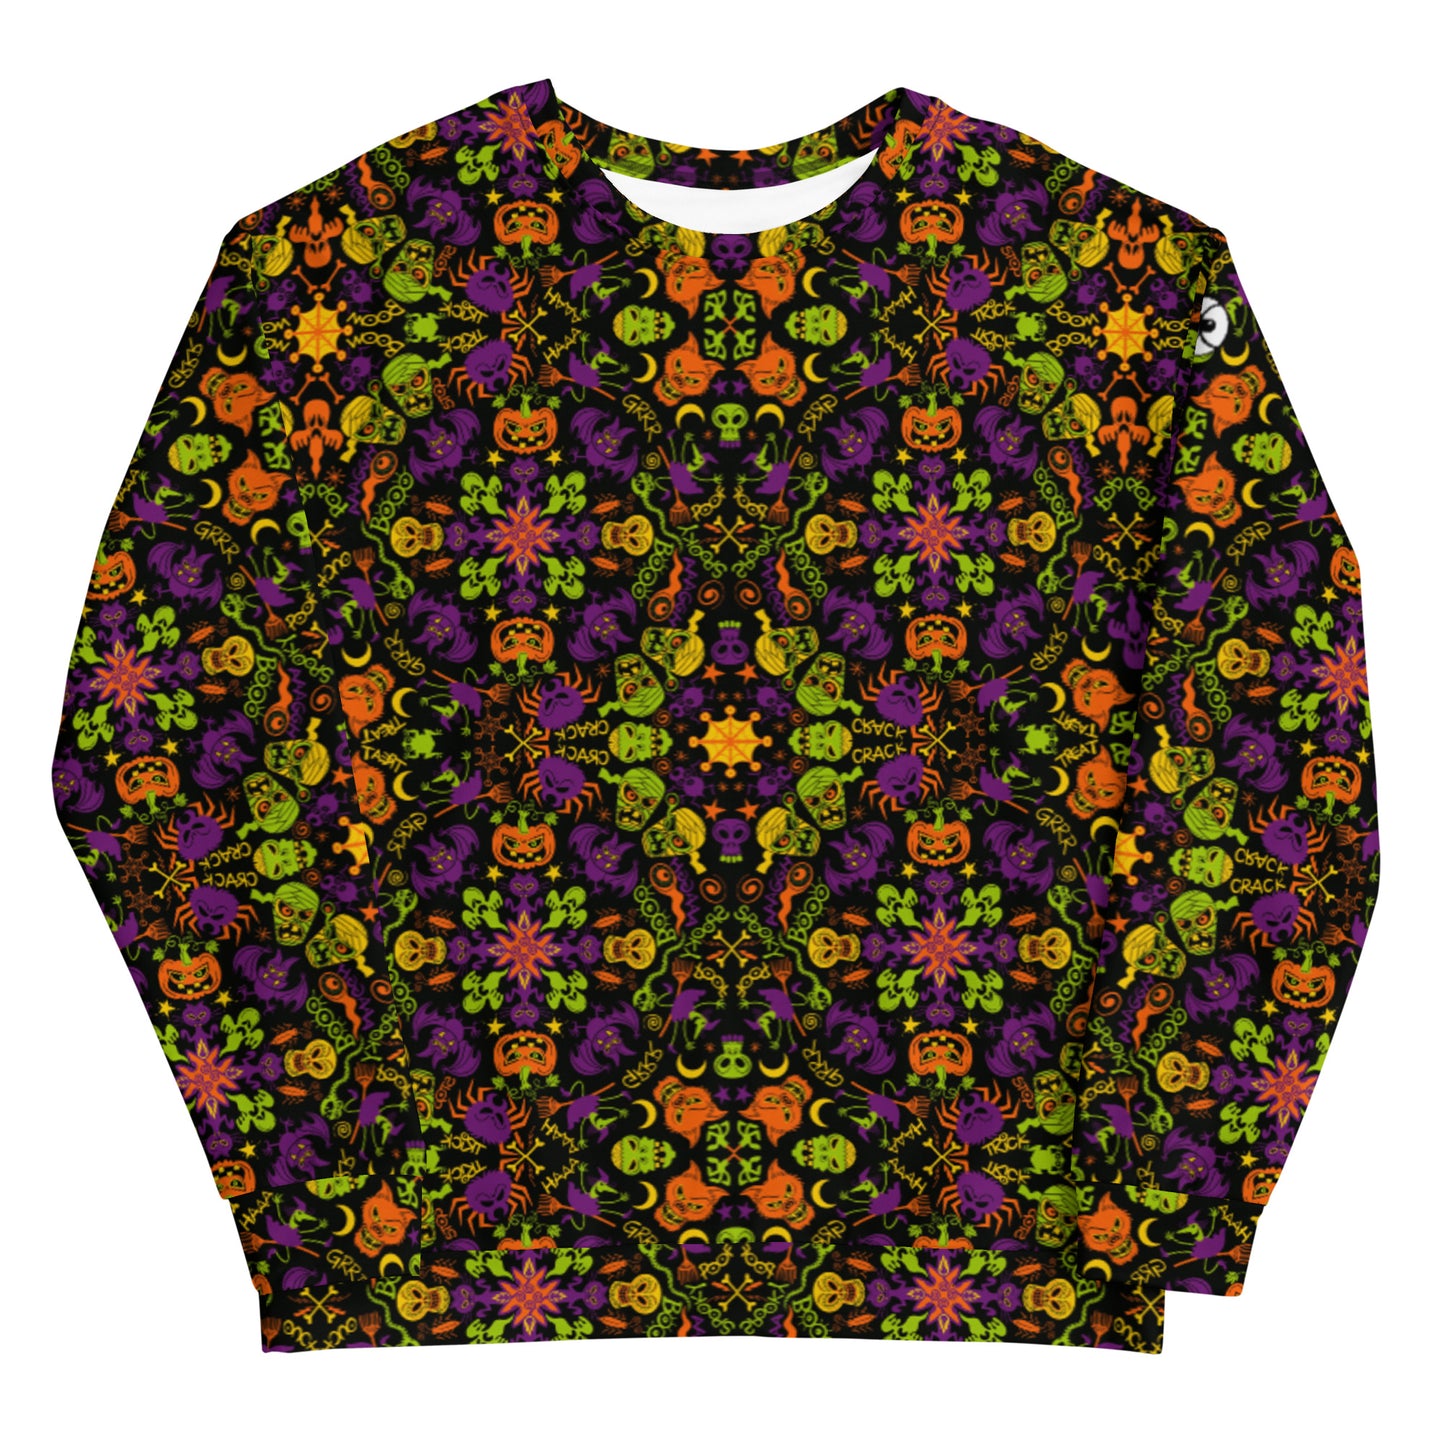 All Halloween stars in a creepy pattern design Unisex Sweatshirt. Front view